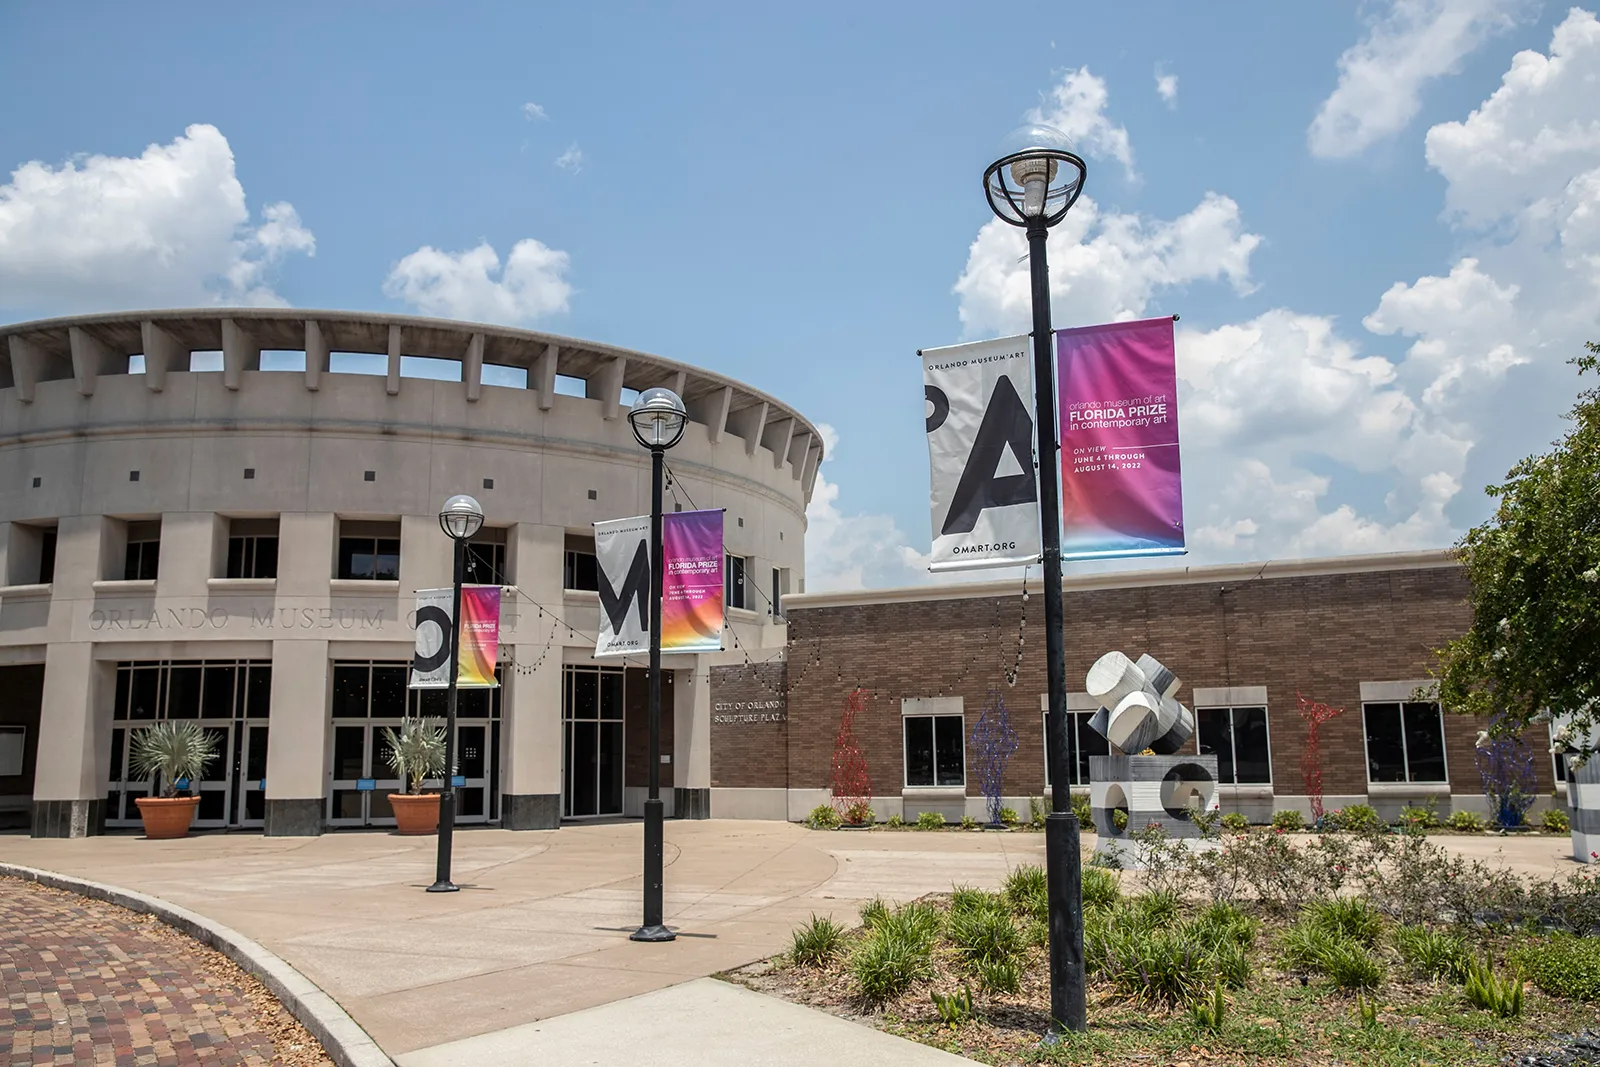 Orlando Museum of Art Names New Chief Curator